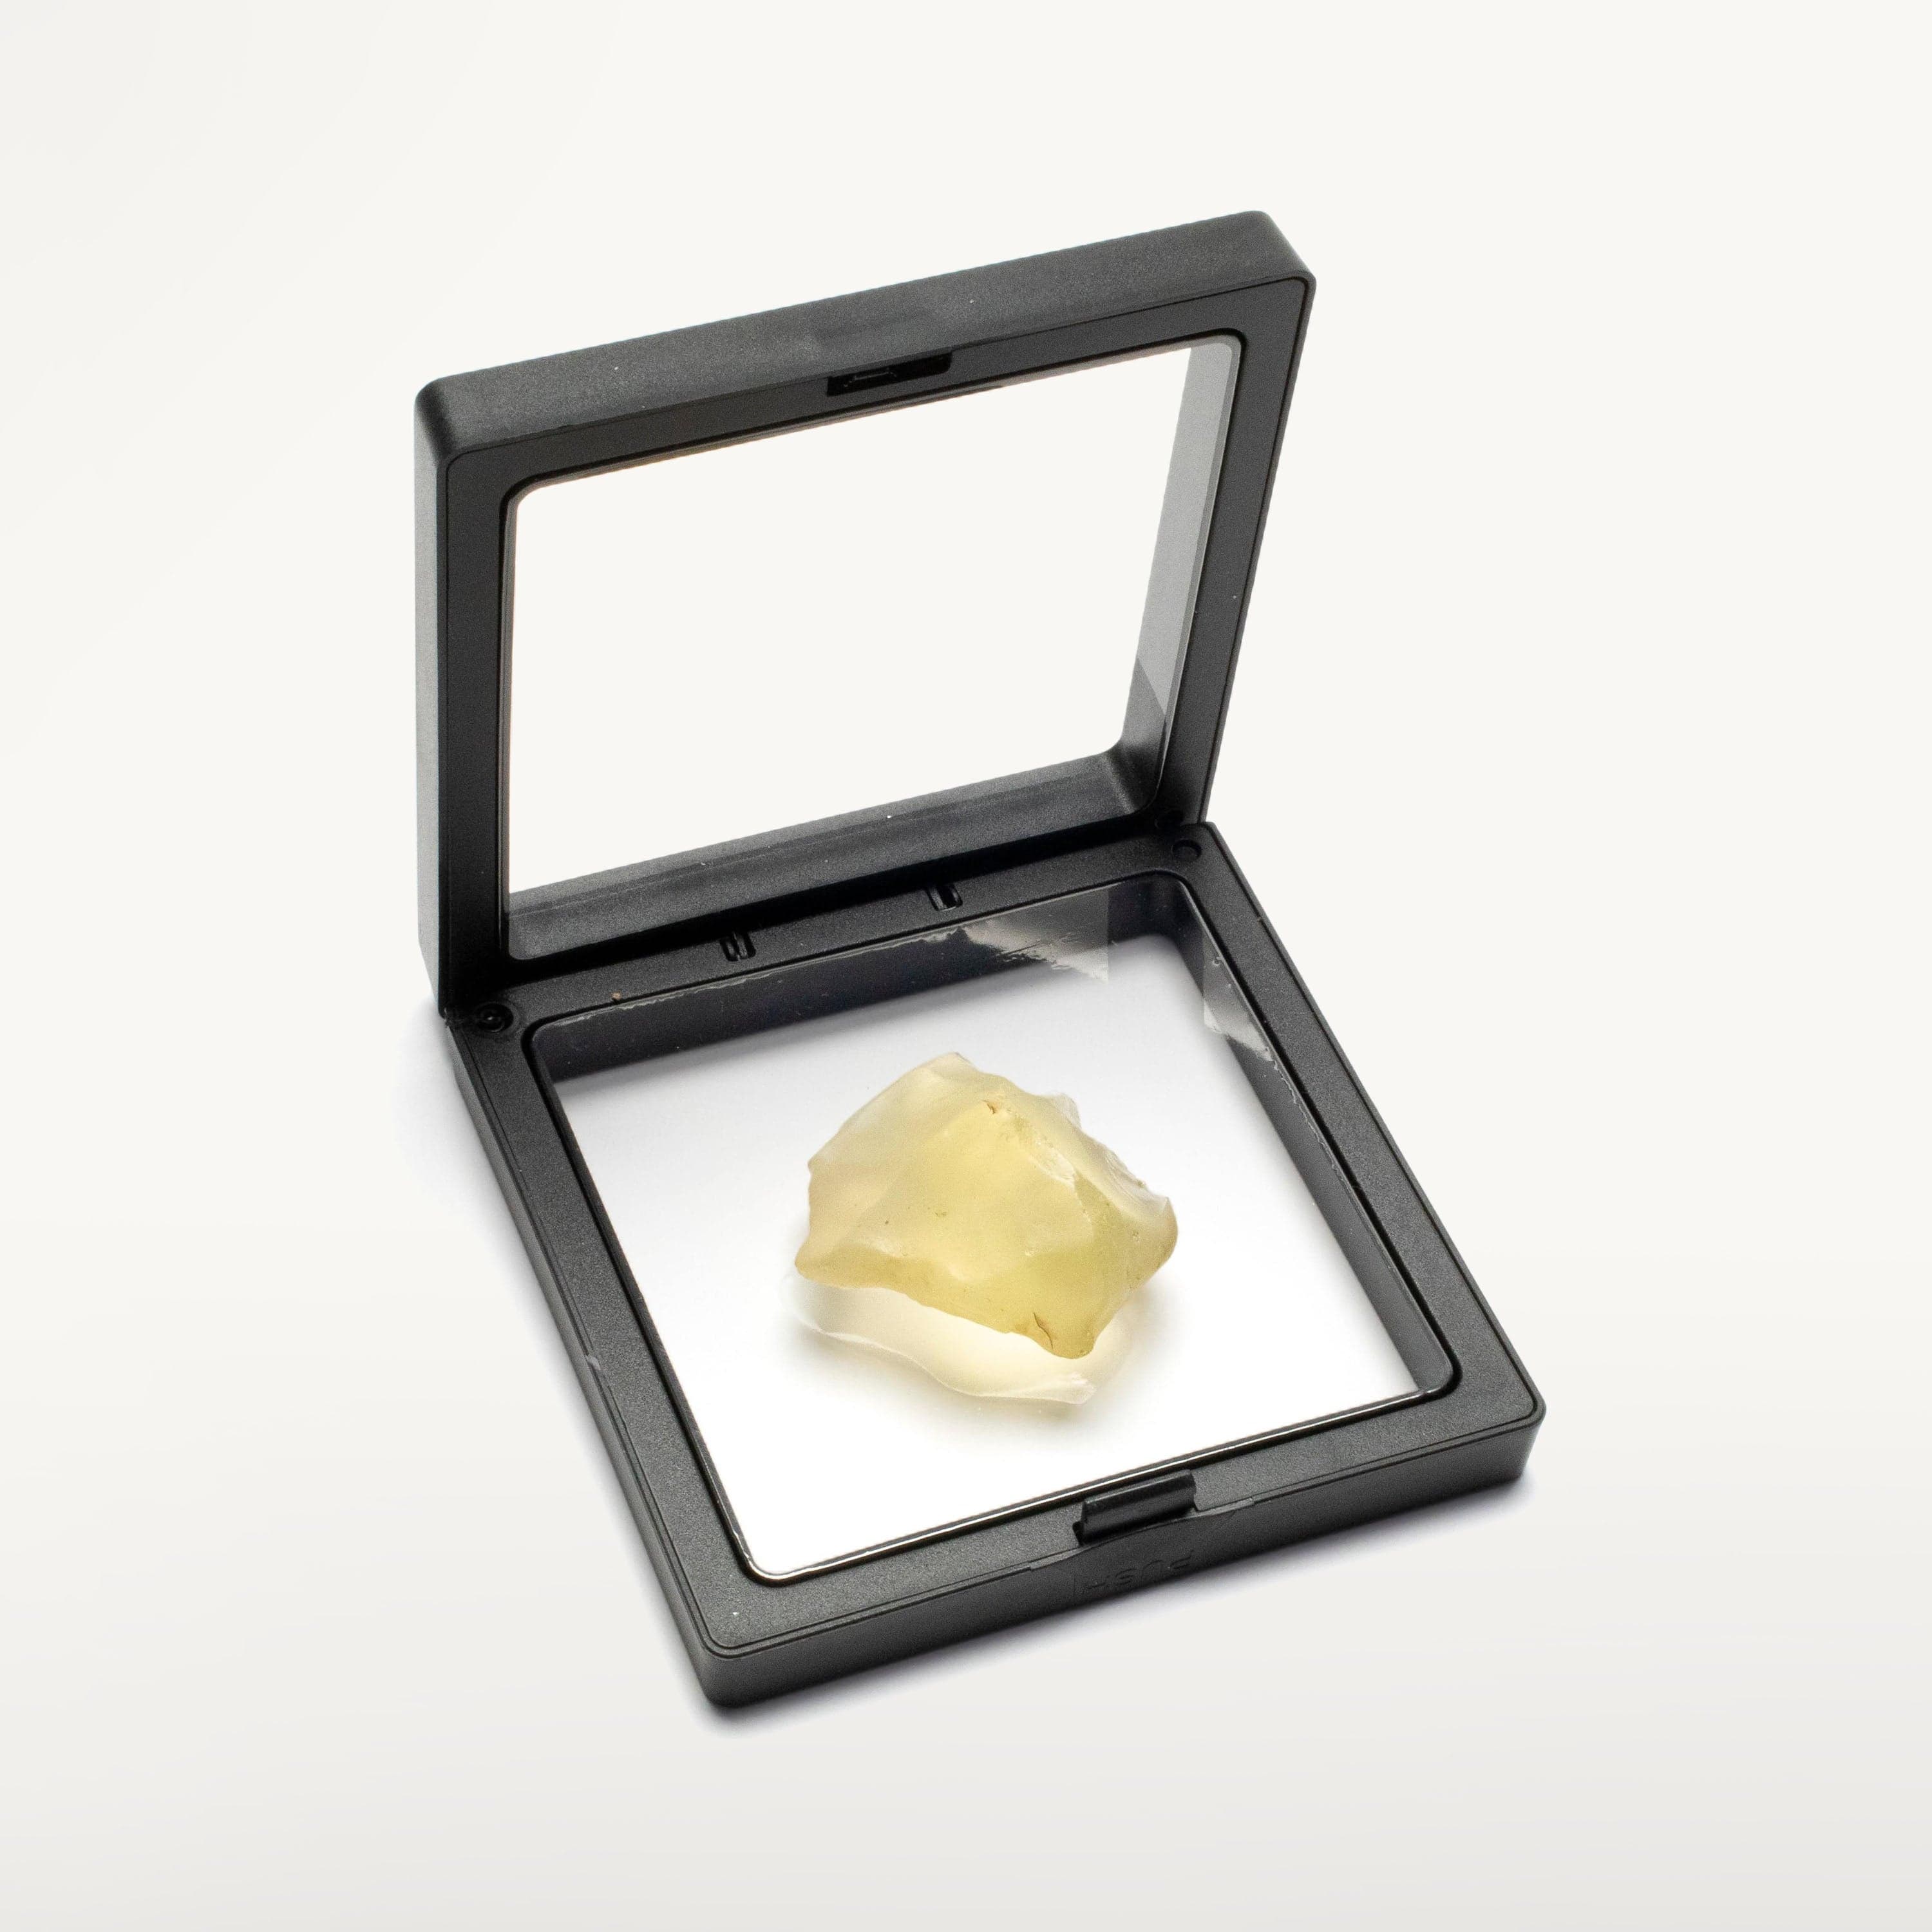 Kalifano Libyan Desert Glass Libyan Desert Glass Tektite: 20-25 grams / 100-125 carats LG450